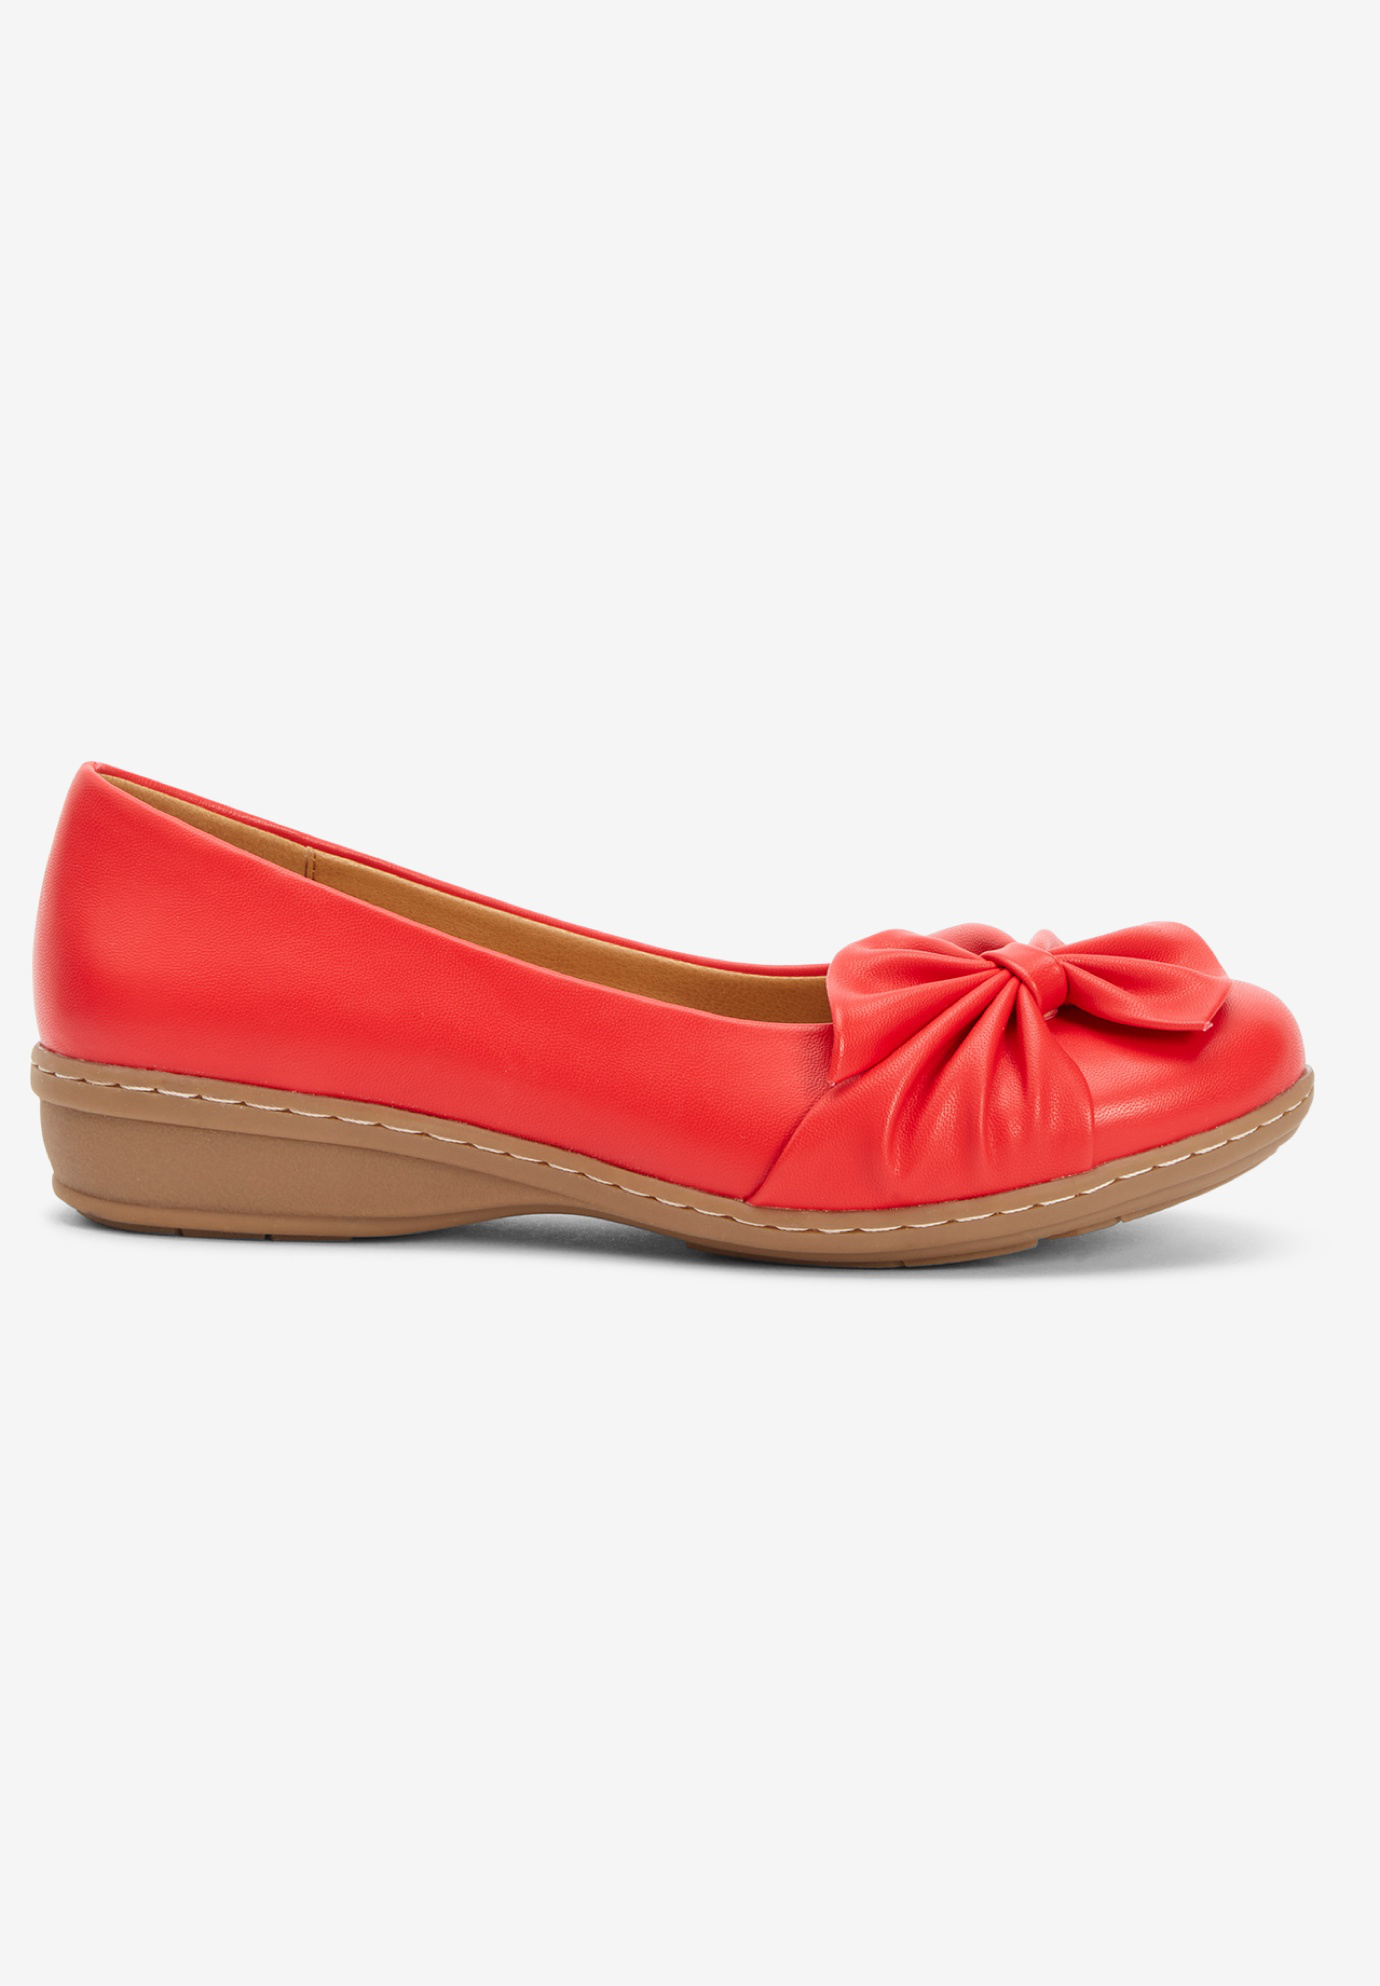 Comfortview Women's Wide Width The Pamela Slip On Flat Loafer Shoes - image 5 of 7